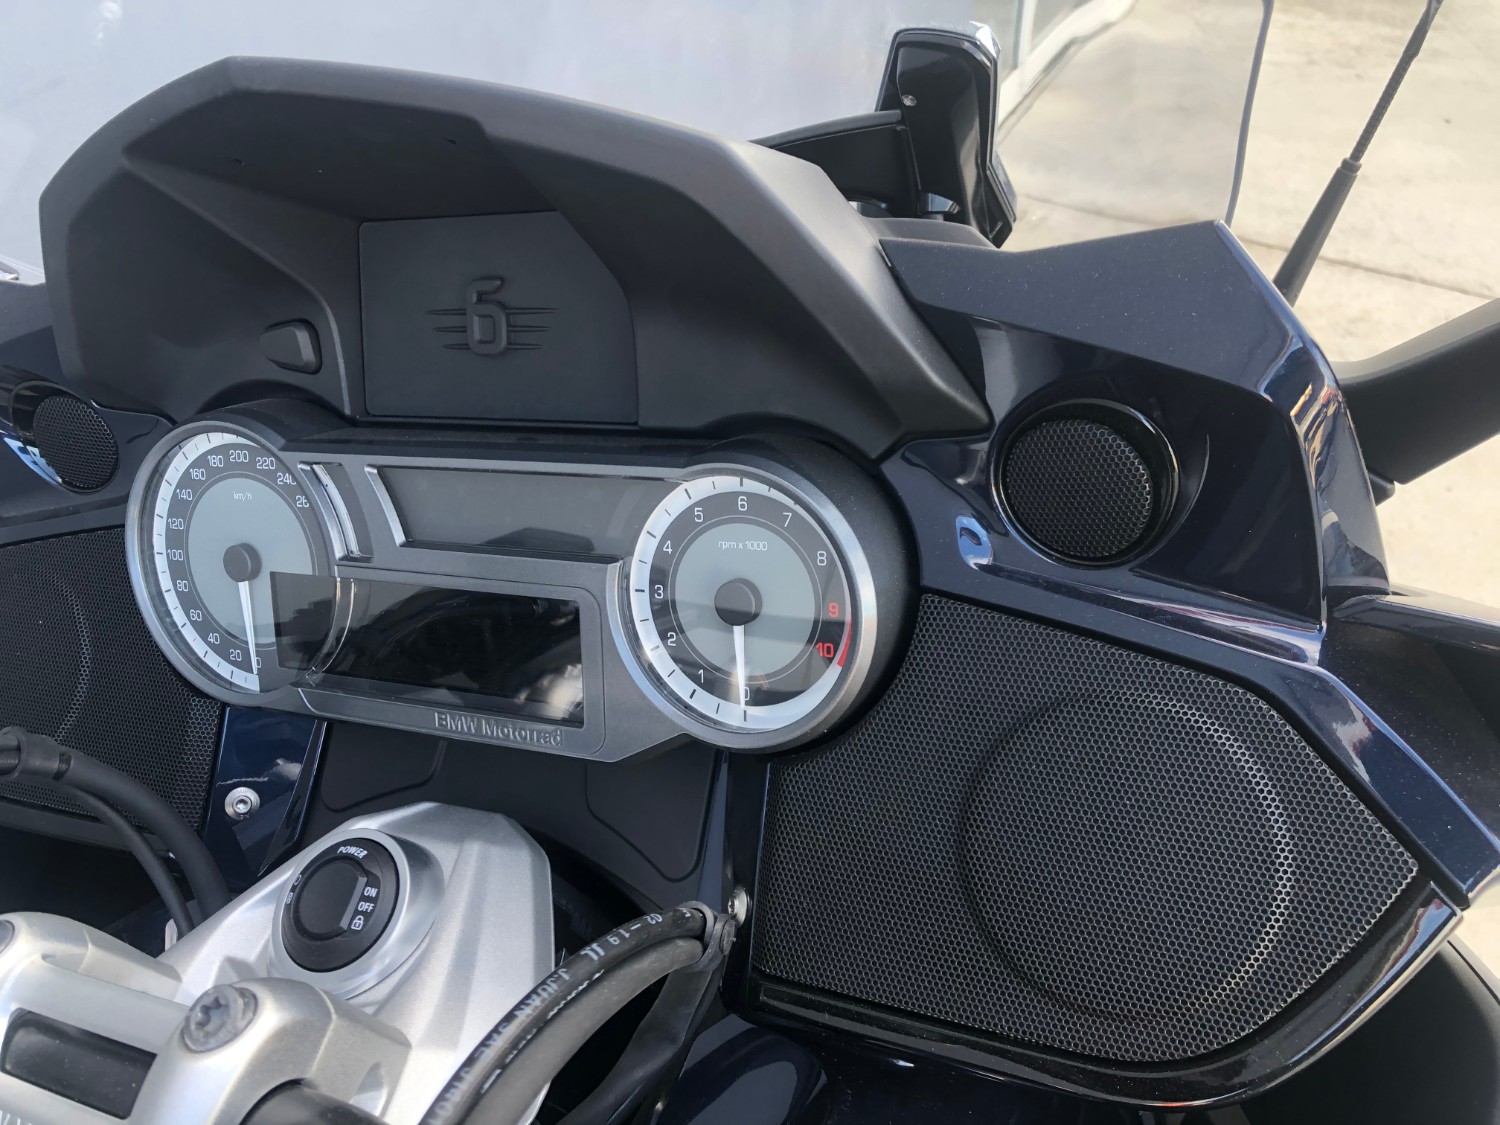 2019 BMW K1600 B Deluxe Motorcycle Image 34